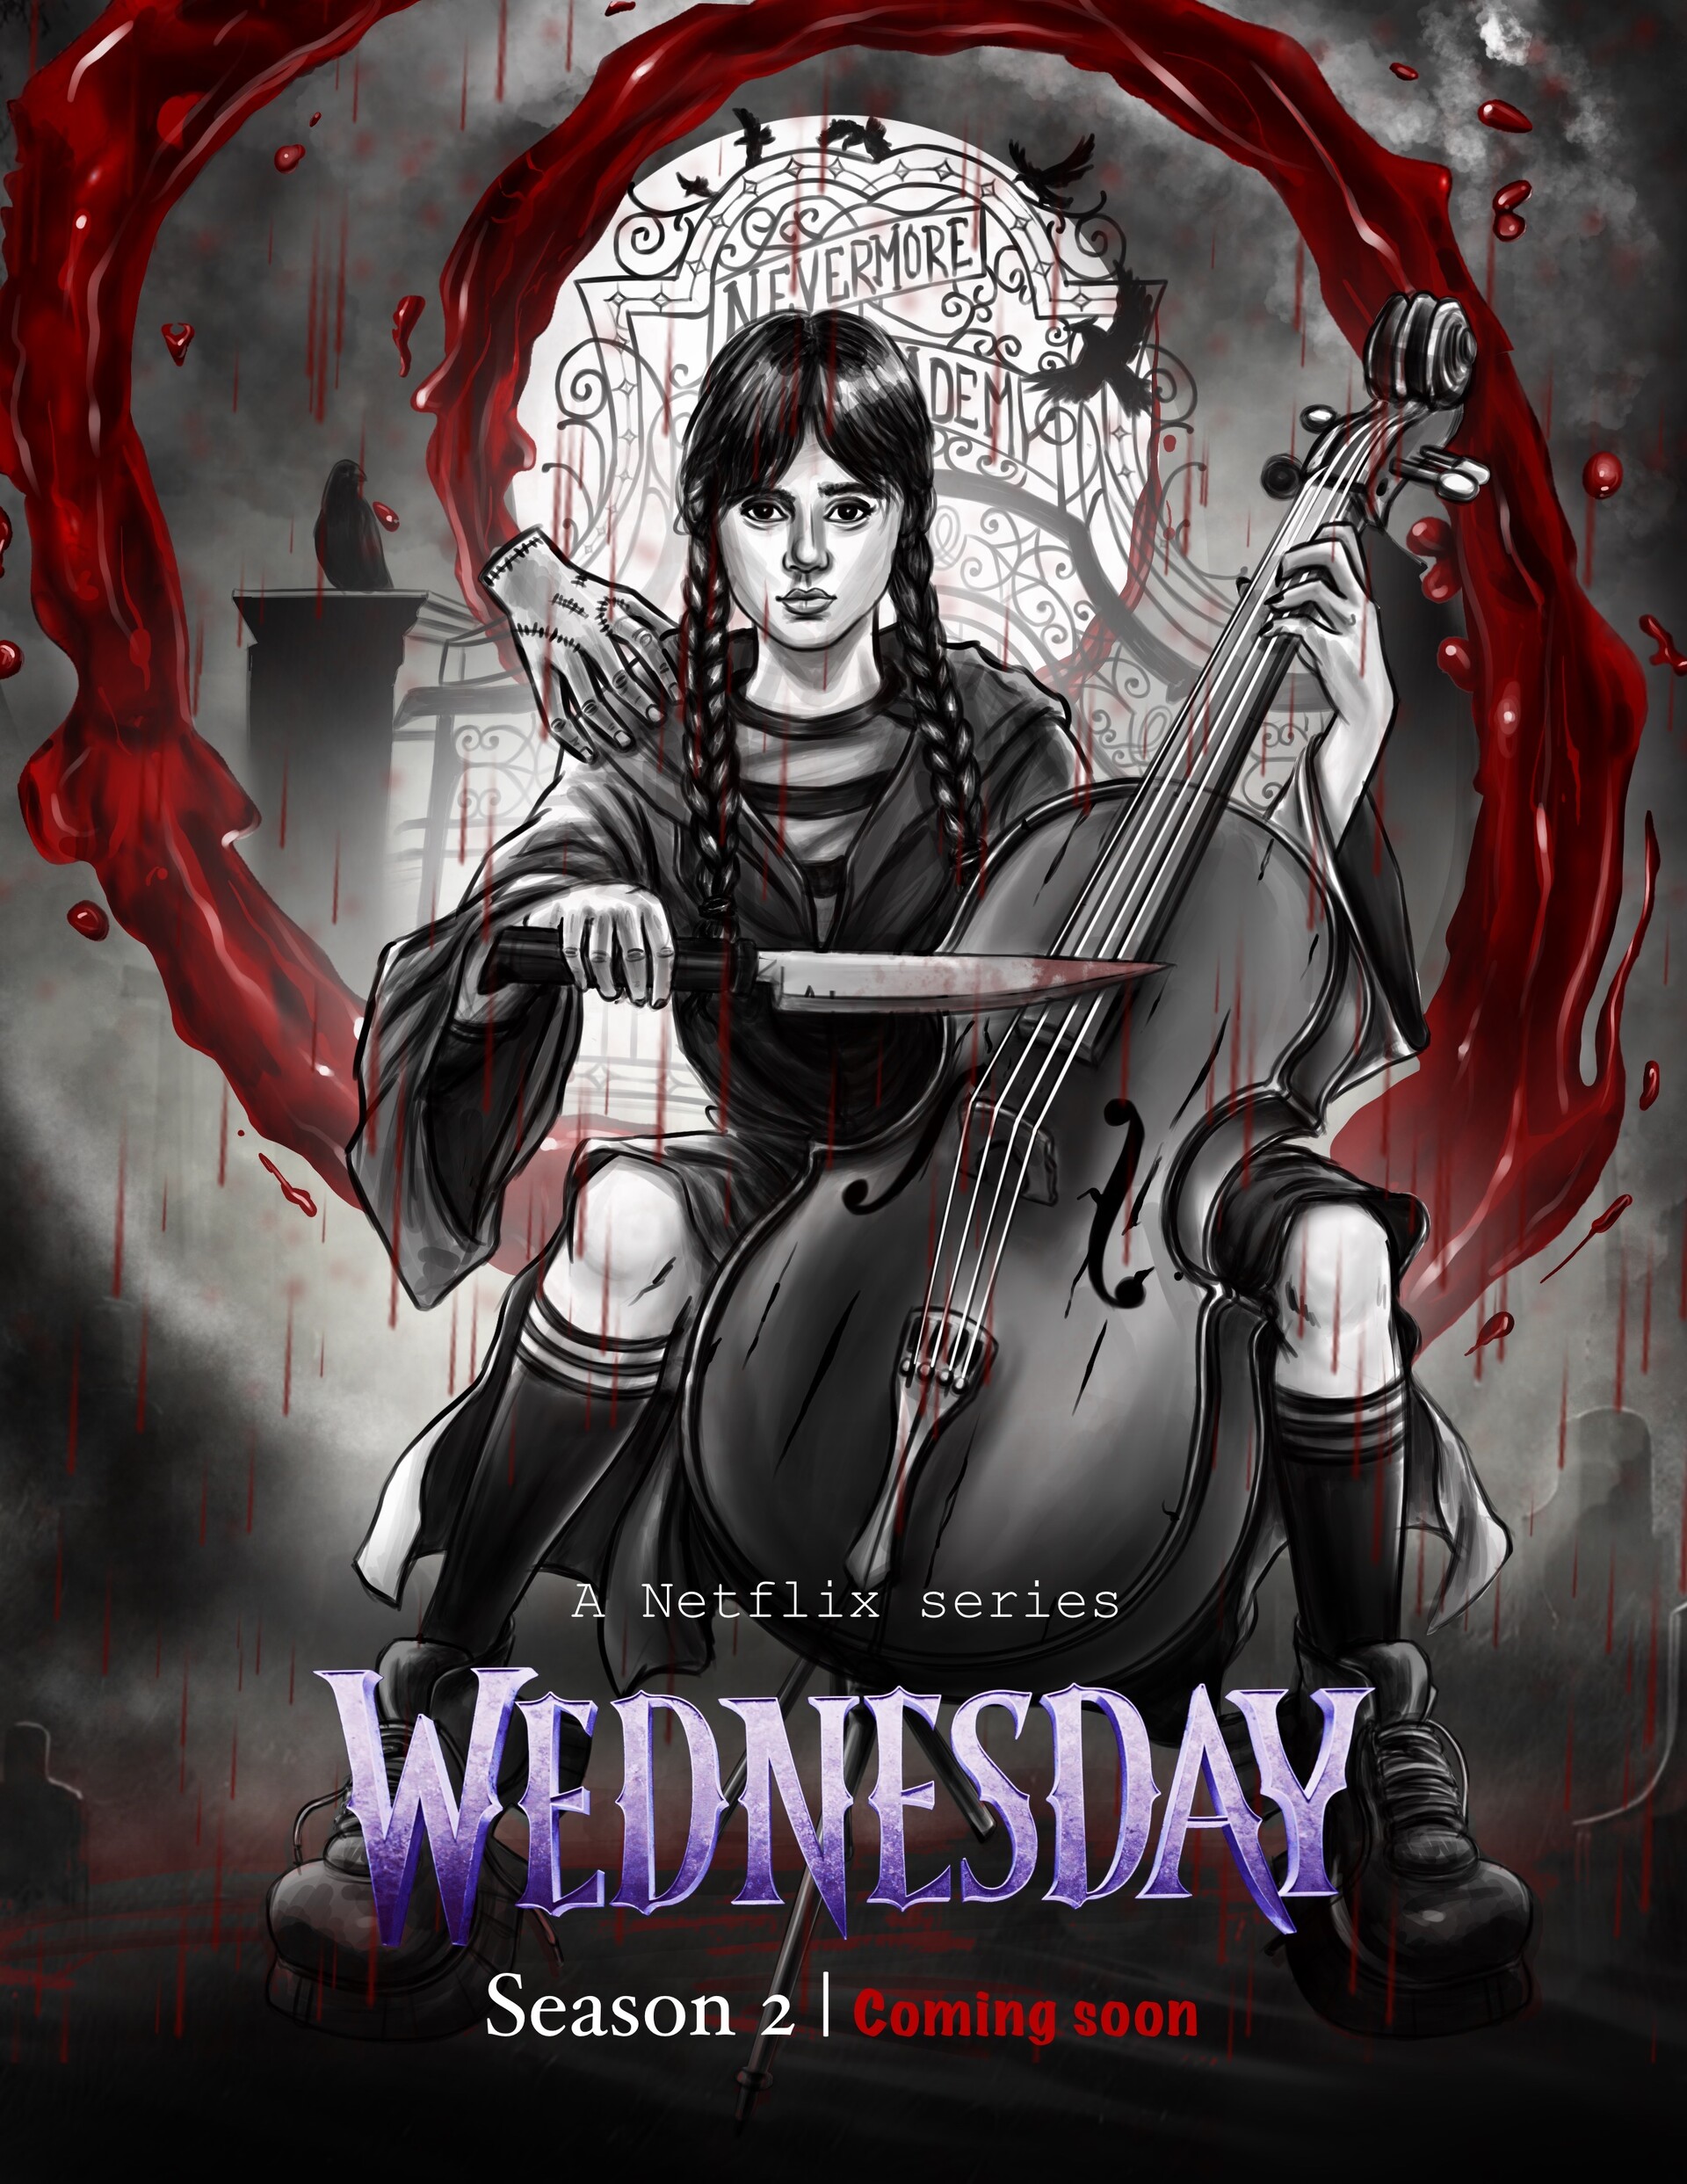 Wednesday Season 2 Concept Poster, NSFX Studios